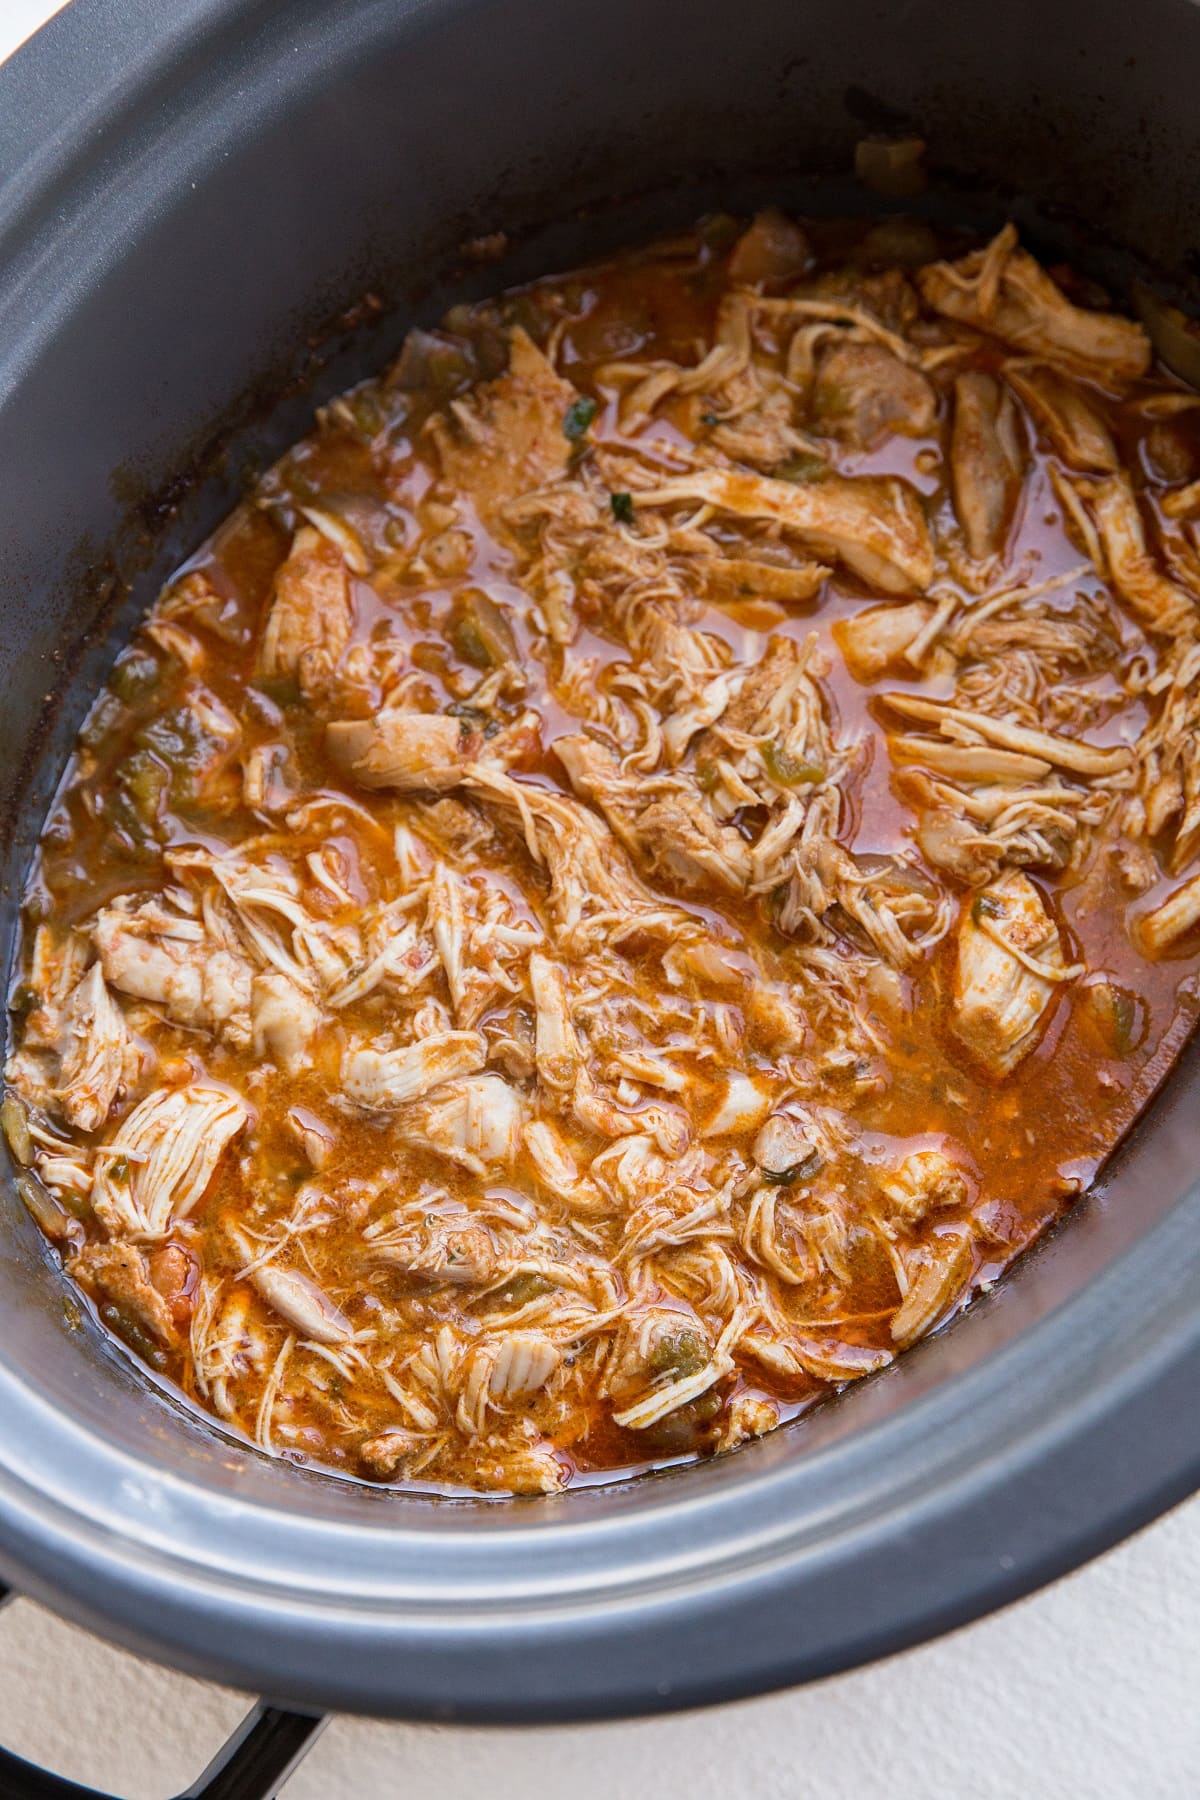 Crockpot Chicken Fajitas - Prep In 10 Minutes! - The Anthony Kitchen